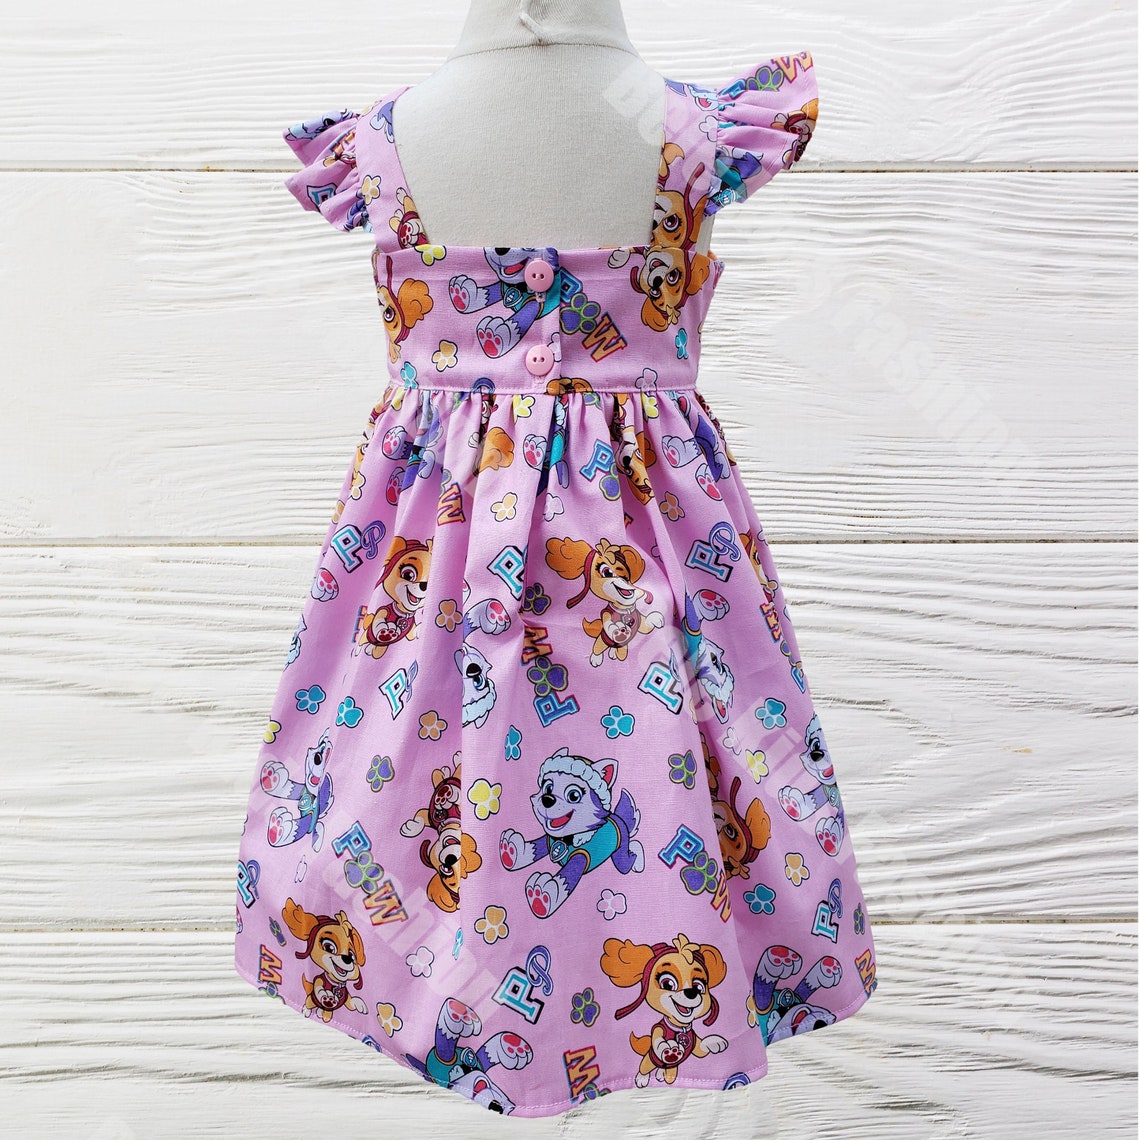 PAW PATROL DRESS Birthday dress Baby Girl Clothes Paw | Etsy